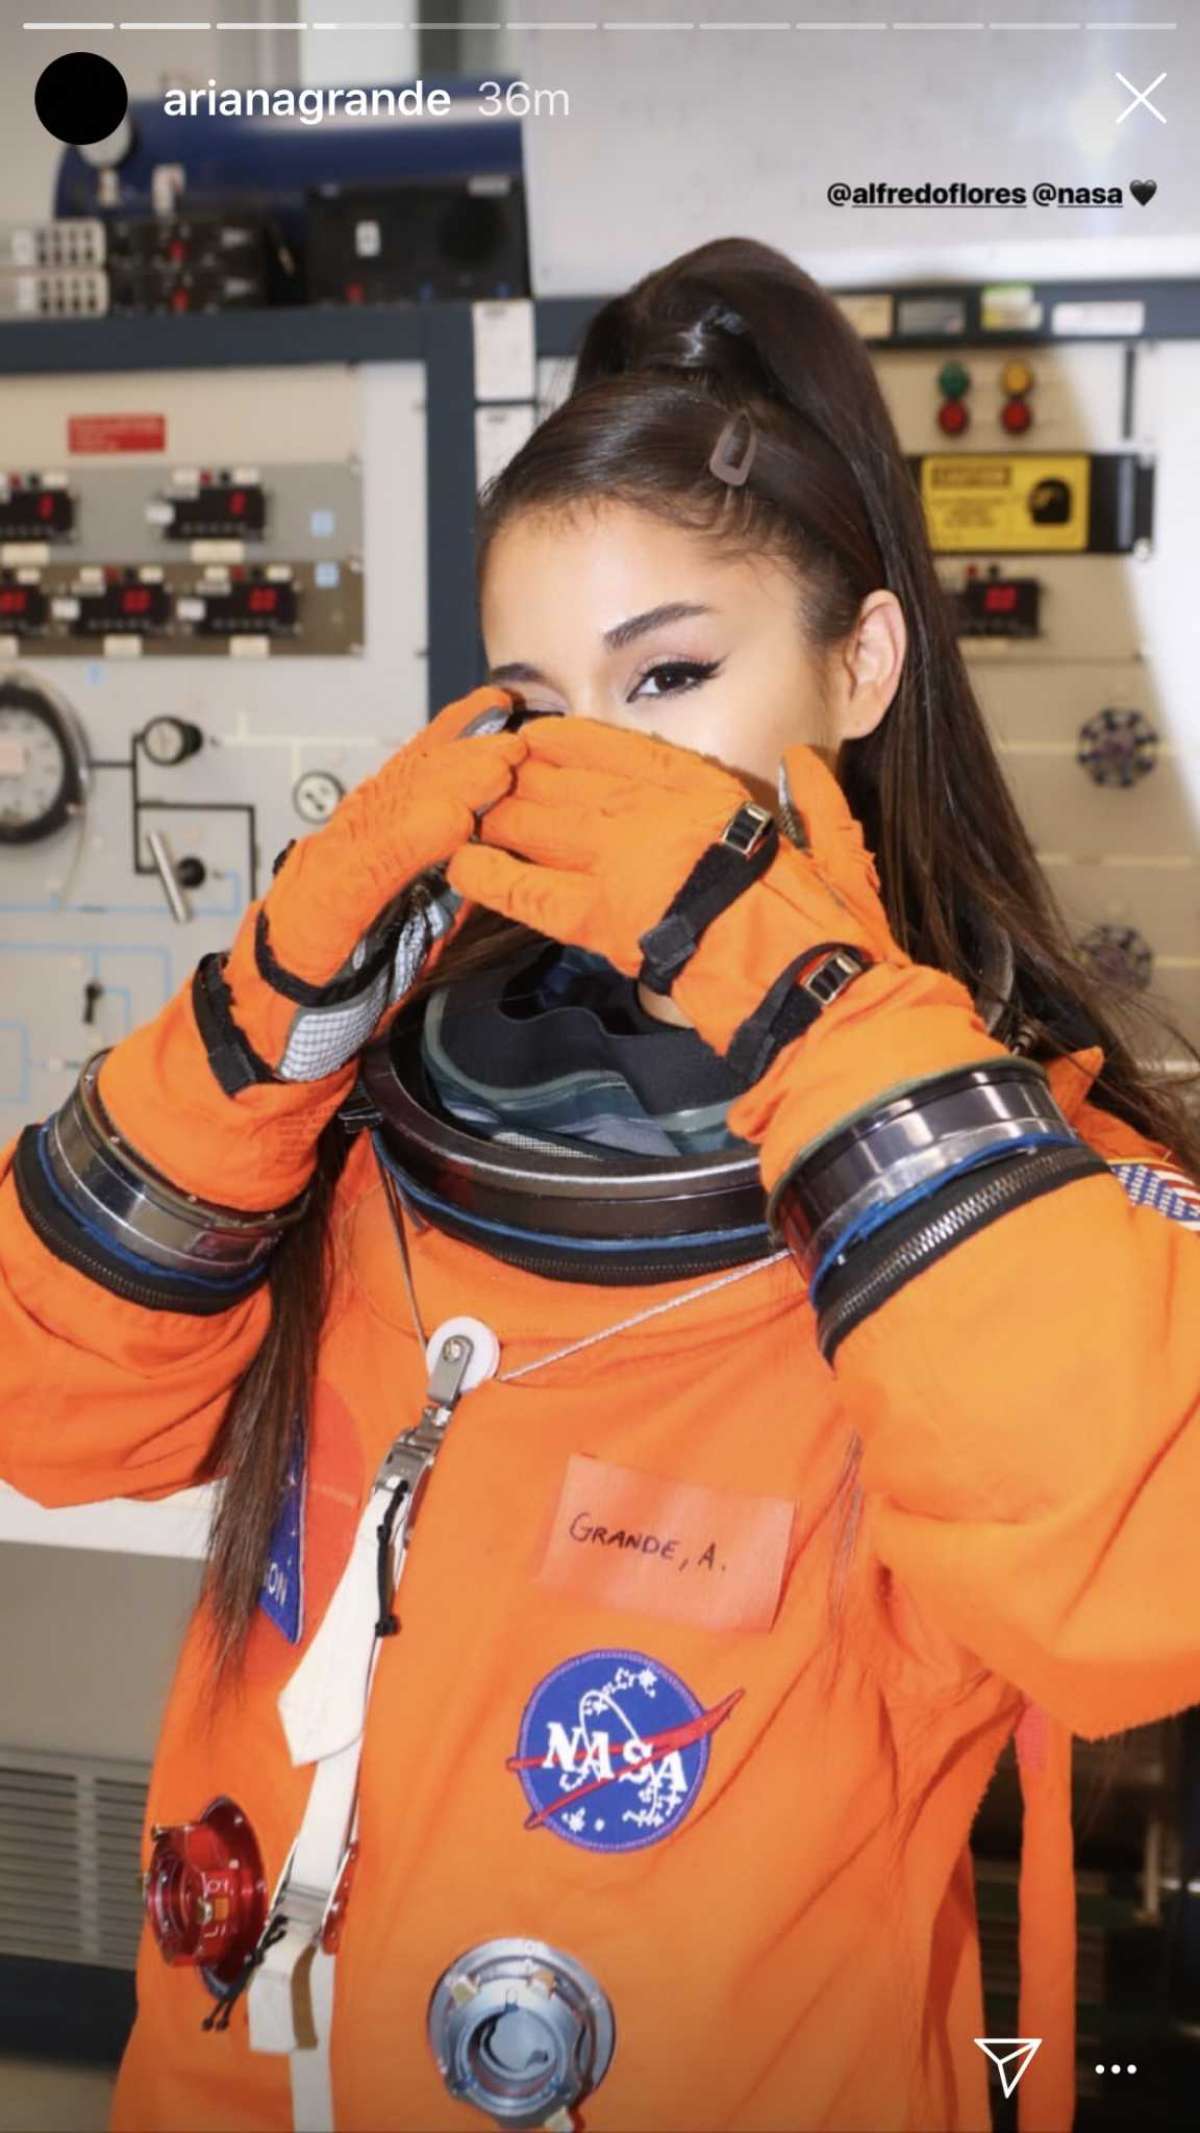 Ariana Grande visits NASA ahead of Houston show